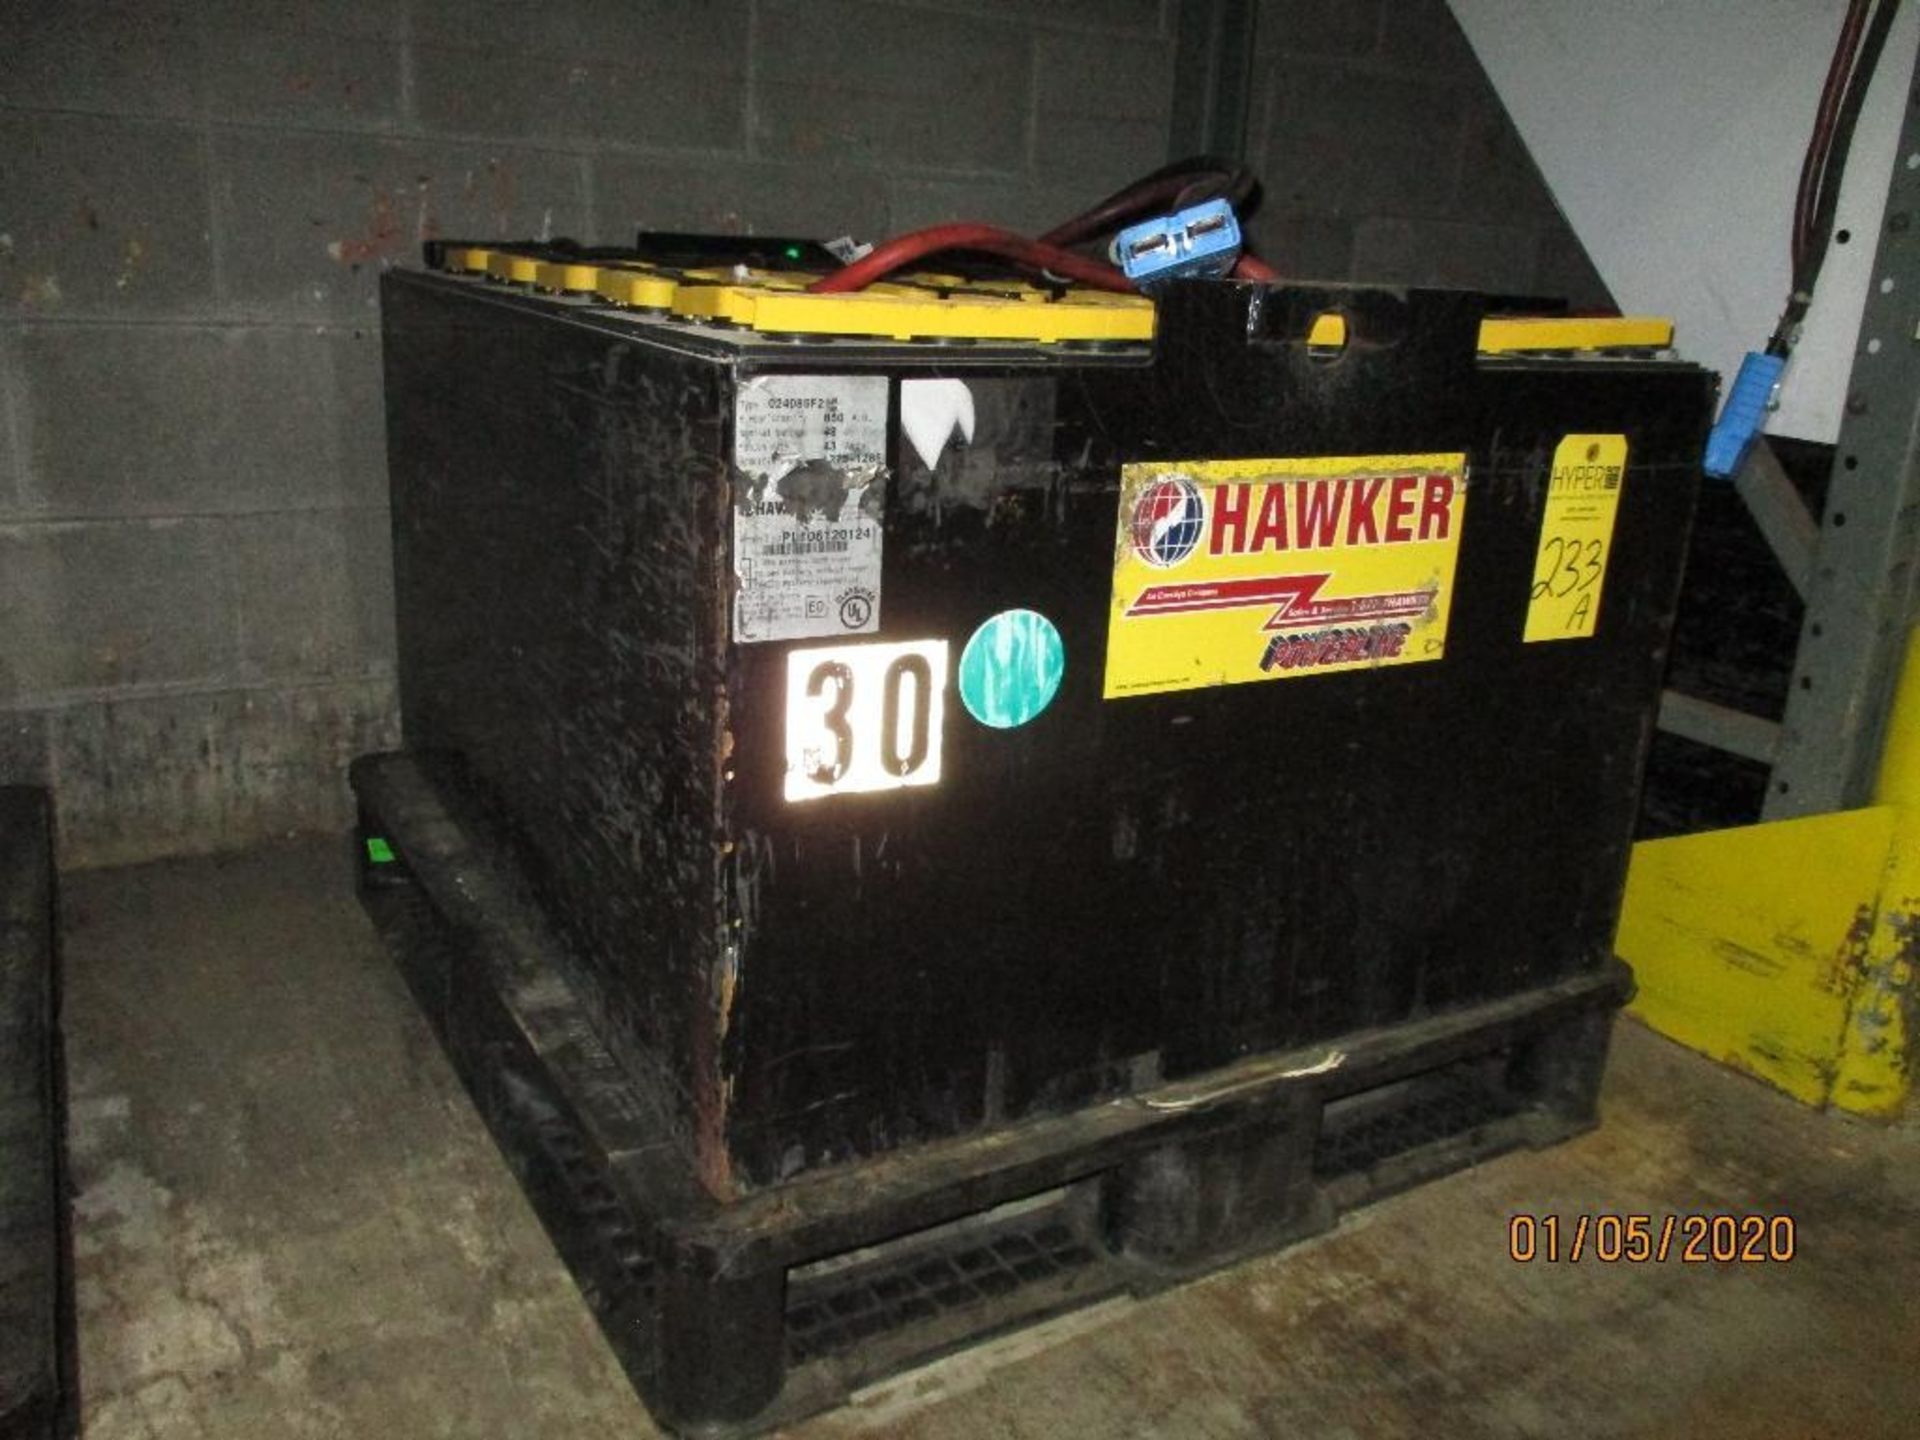 Hawker Forklift Battery (30) 850 Amp Hours, 48v, Type No. 024085F21